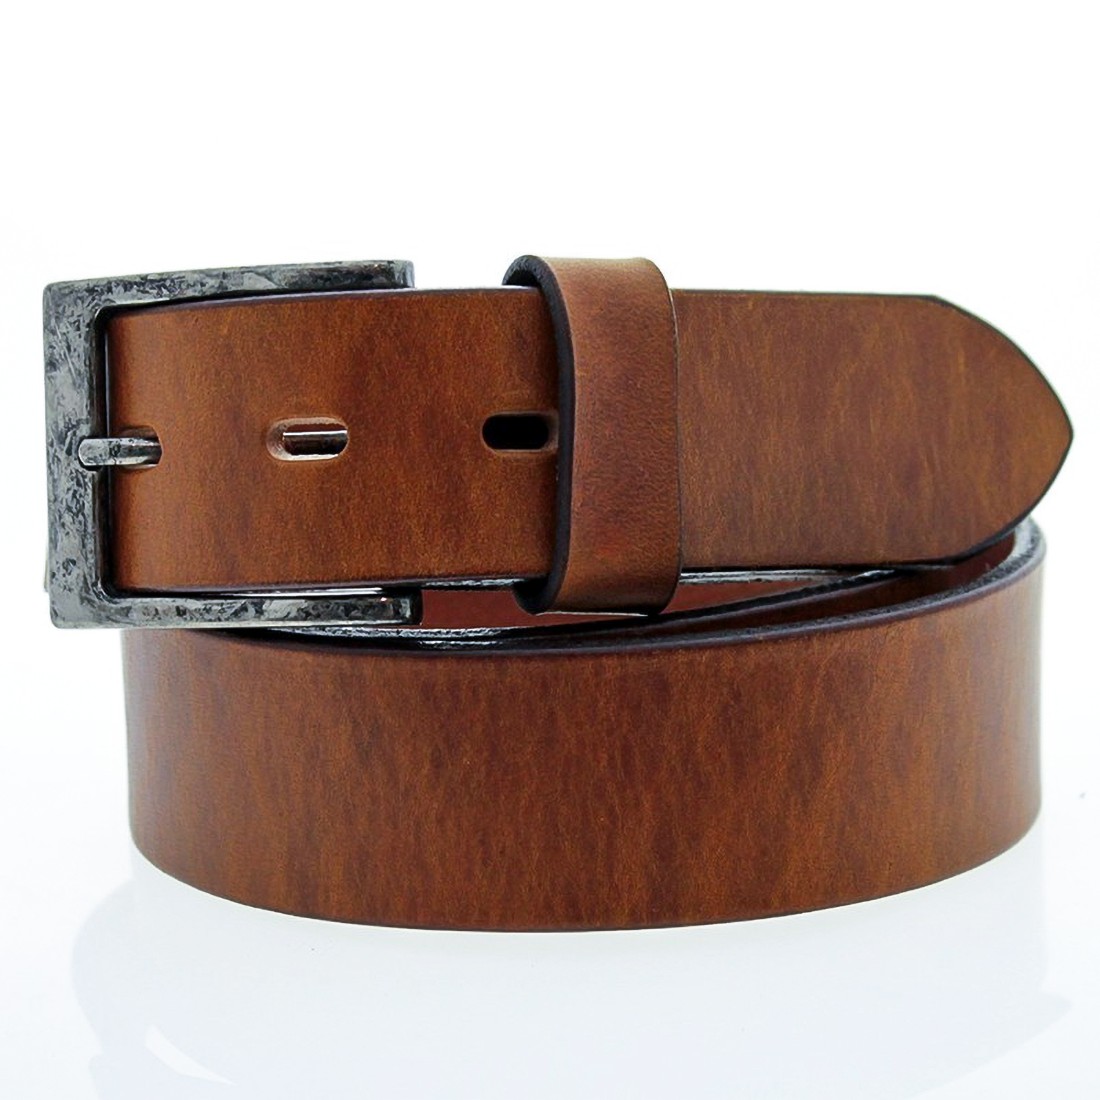 Sole-color leather belt |El Boyero